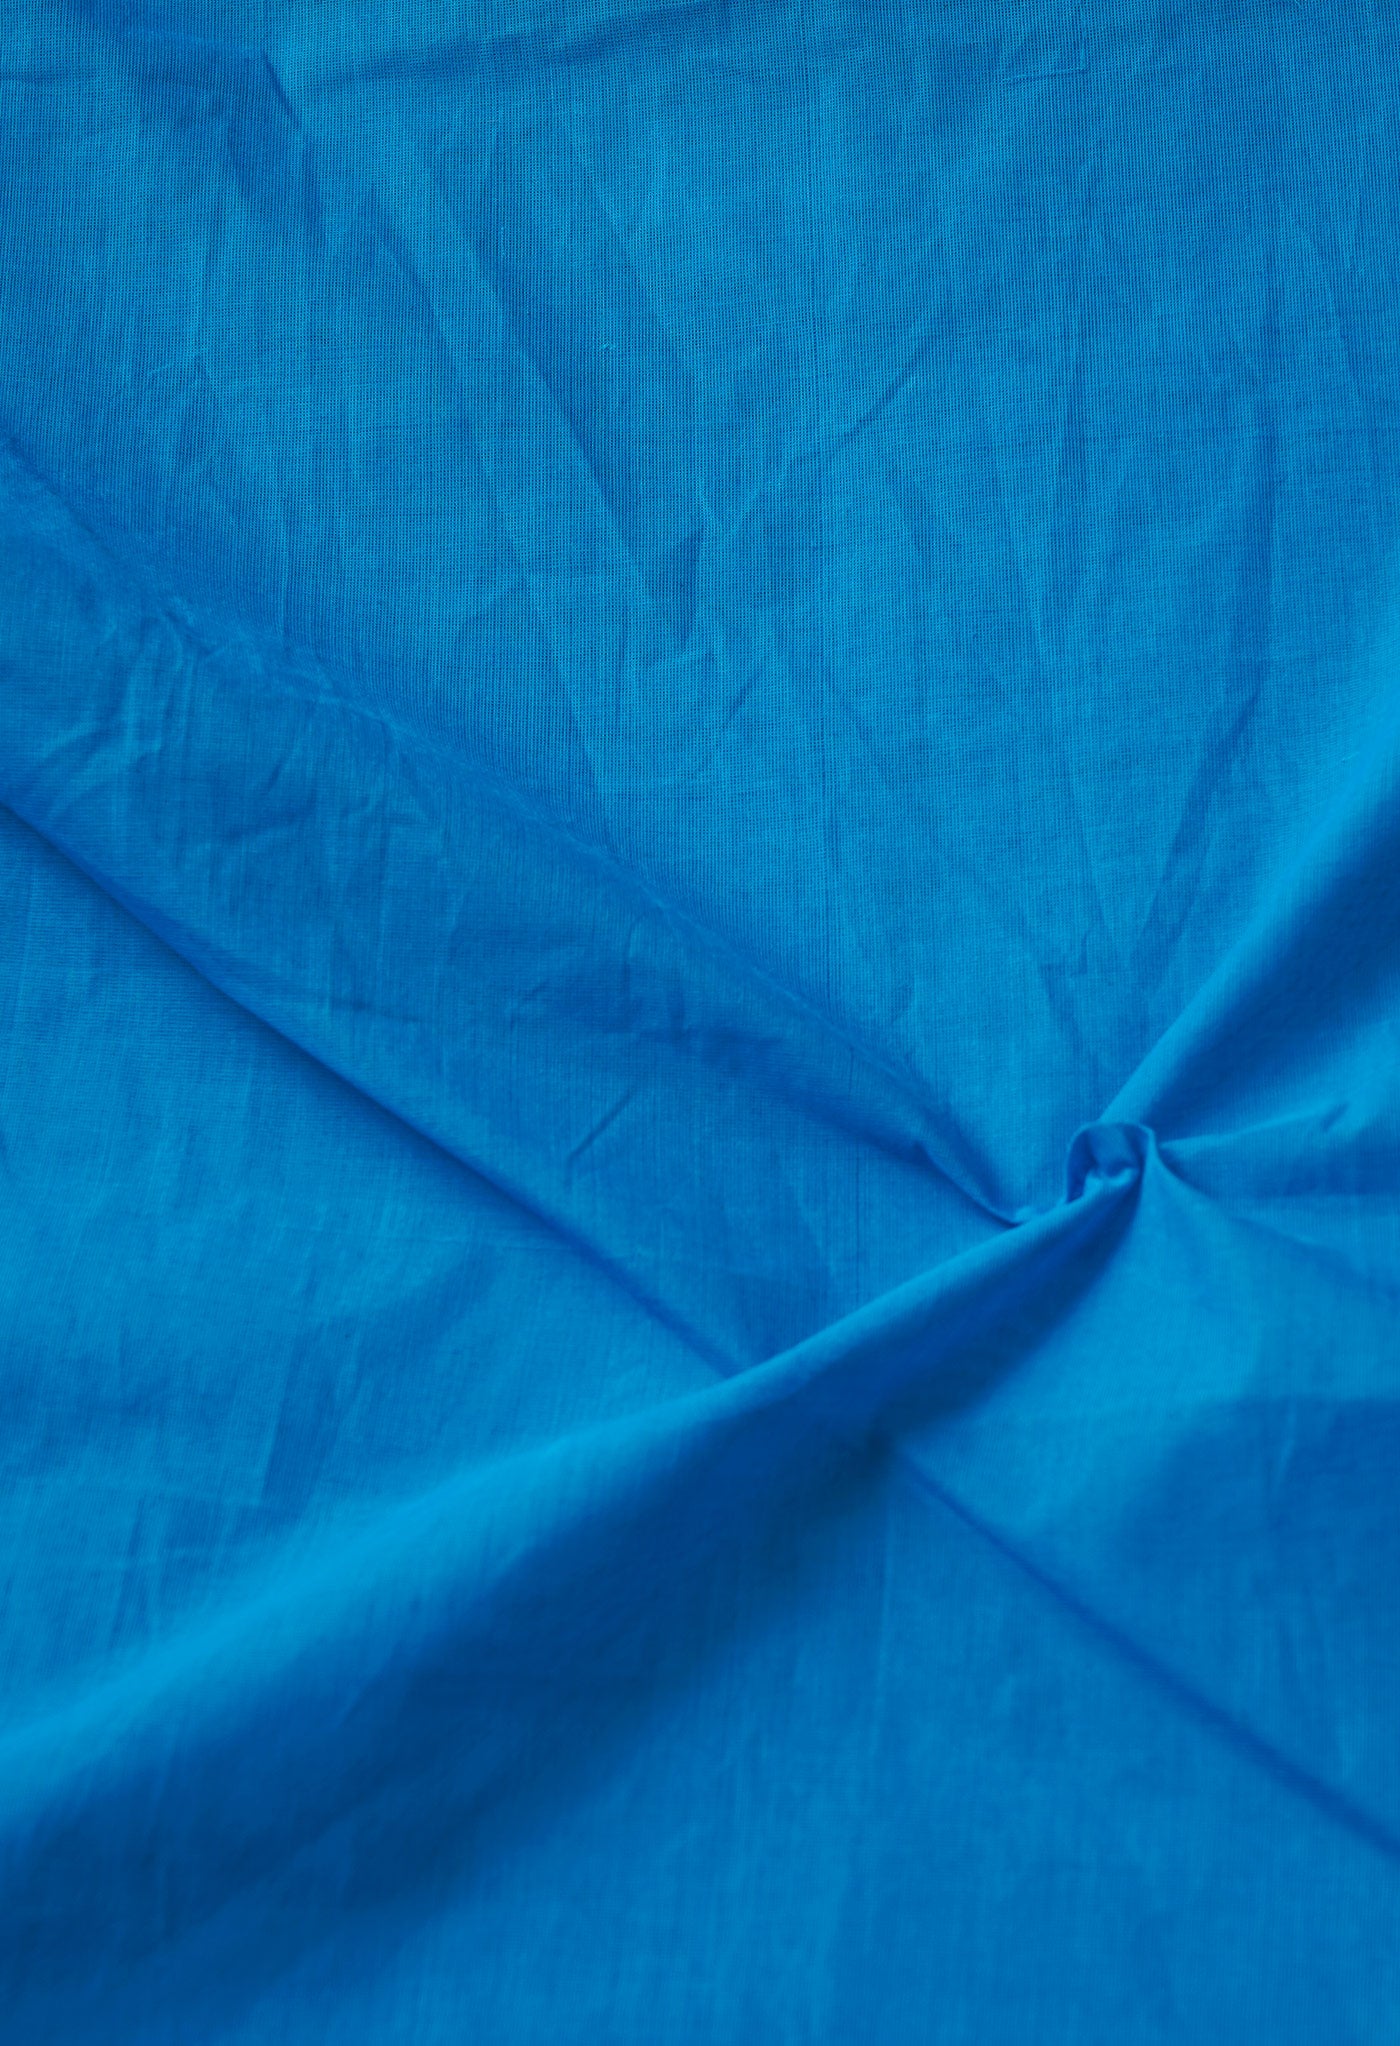 Blue Pure Pavani Venkatagiri Cotton Saree